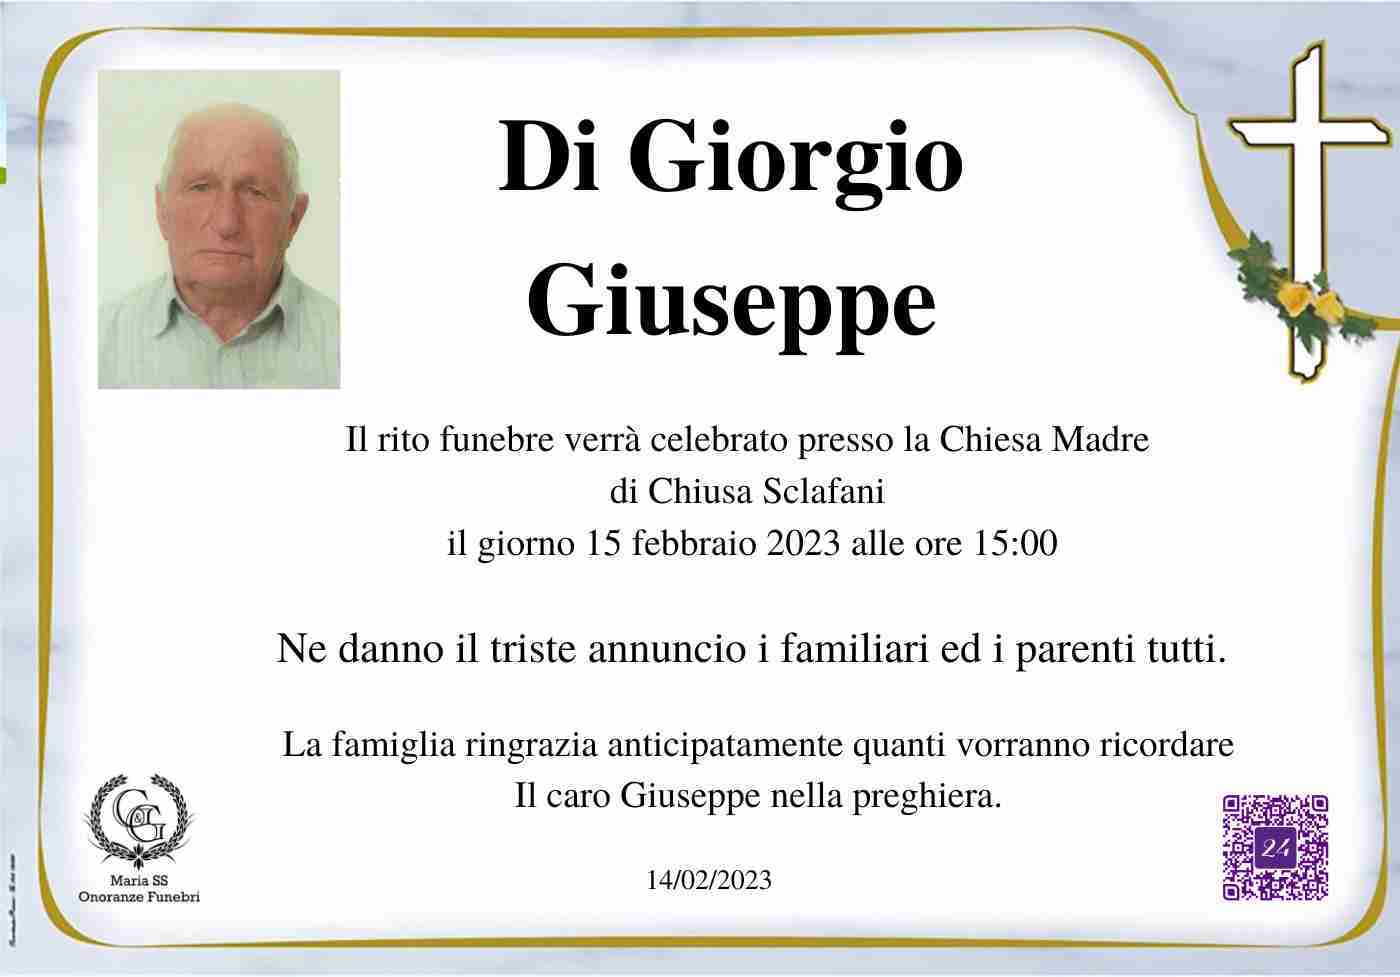 Giuseppe Di Giorgio